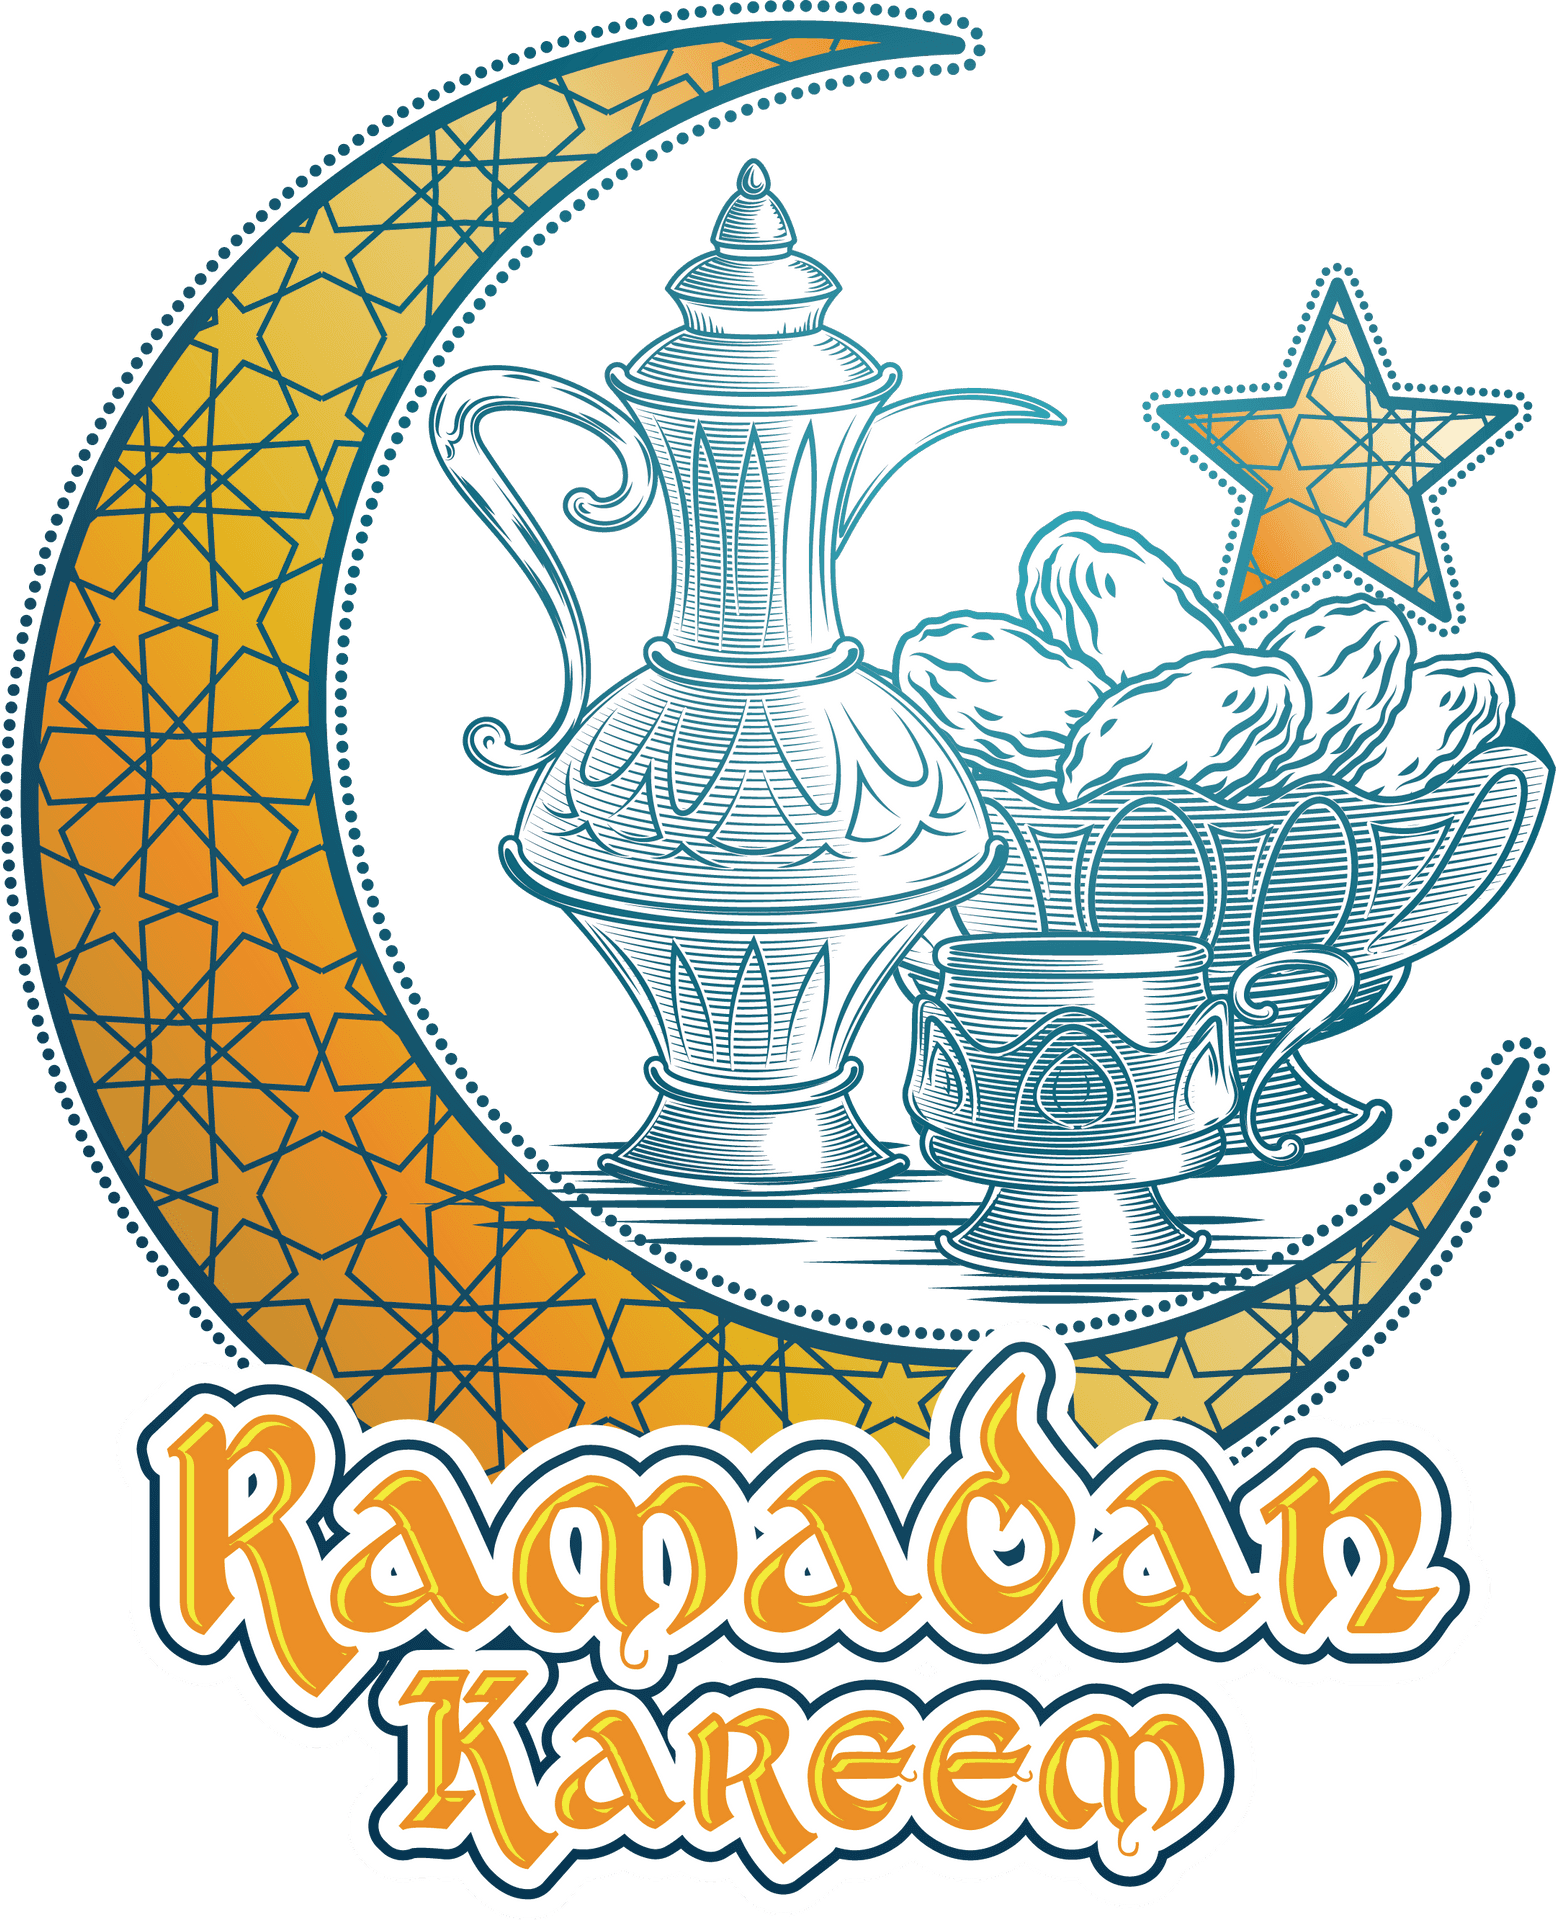 Ramadan Kareem Greeting Design PNG